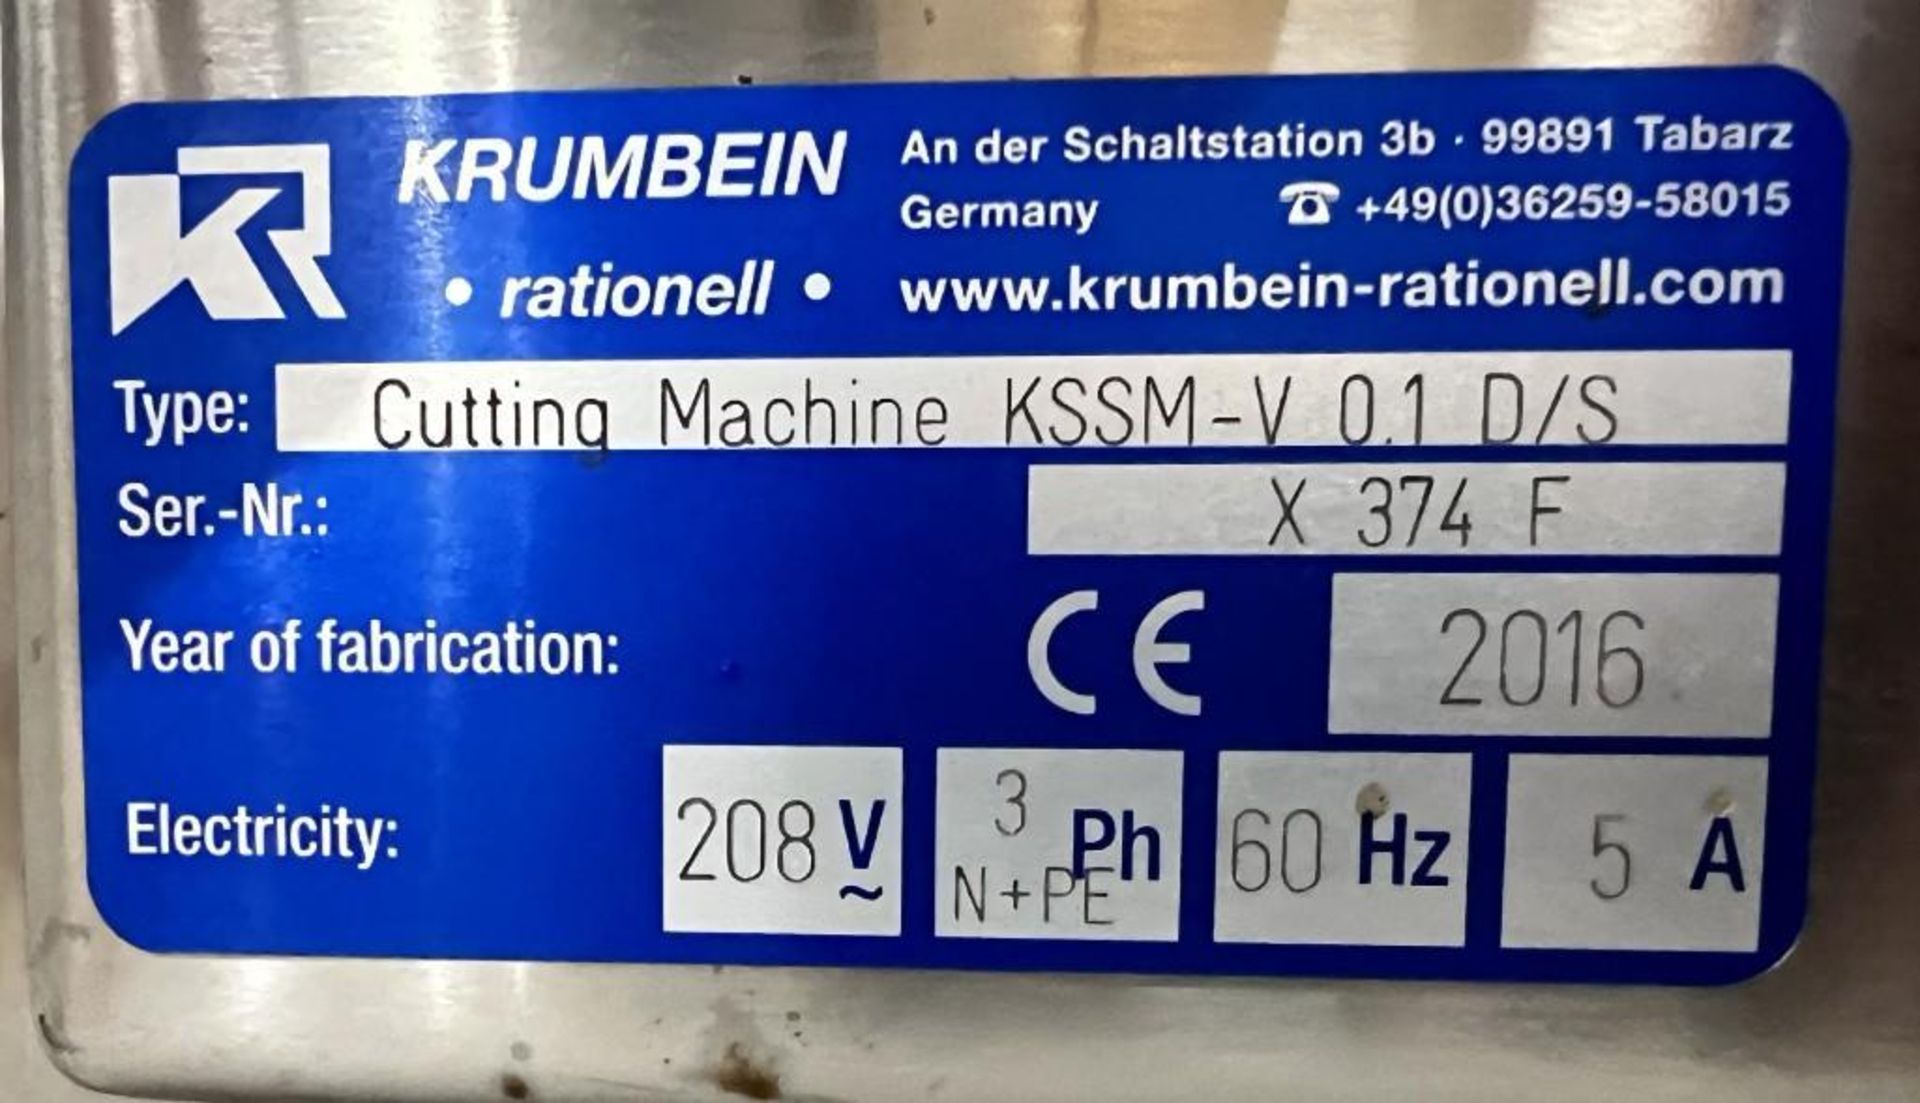 Krumbein Rationell Sheet Cake Cutting Machine, Model KSSM-V 0.1 D/S, Serial# X374F, Built 2016. - Image 9 of 9